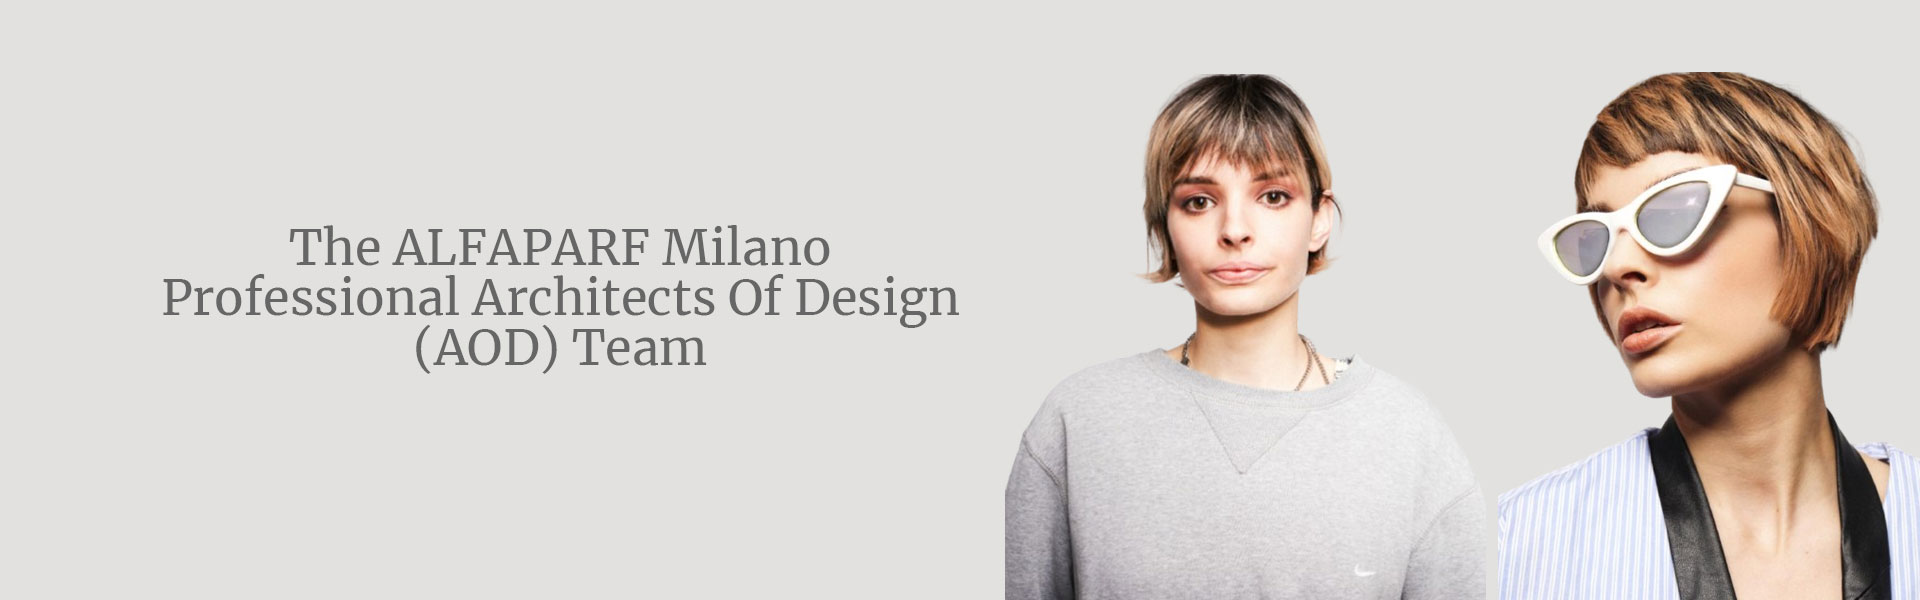 The ALFAPARF Milano Professional Architects Of Design (AOD) Team in Teddington, Twickenham